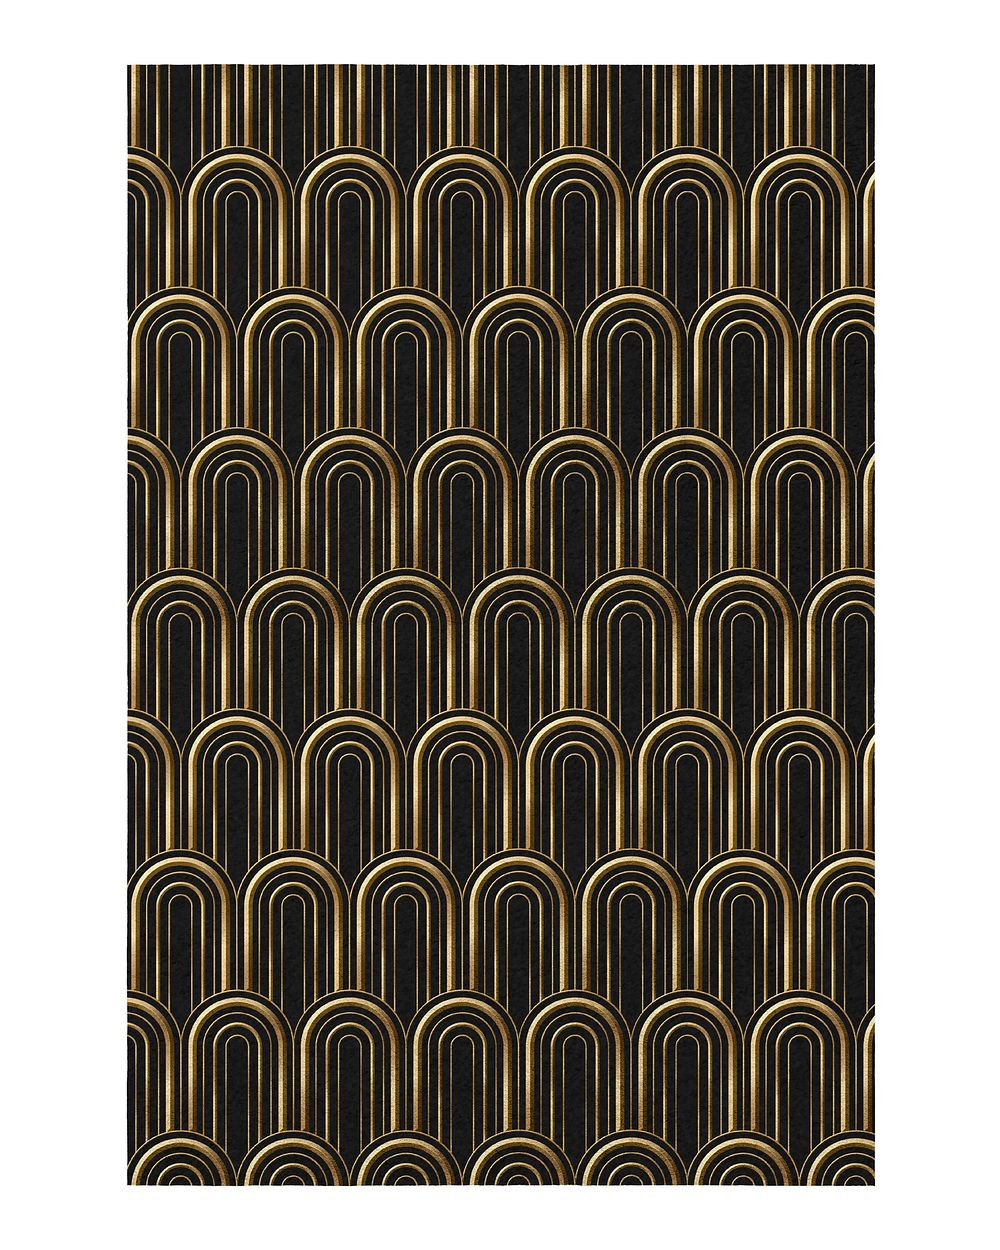 Vintage art deco poster, black and gold geometric pattern design